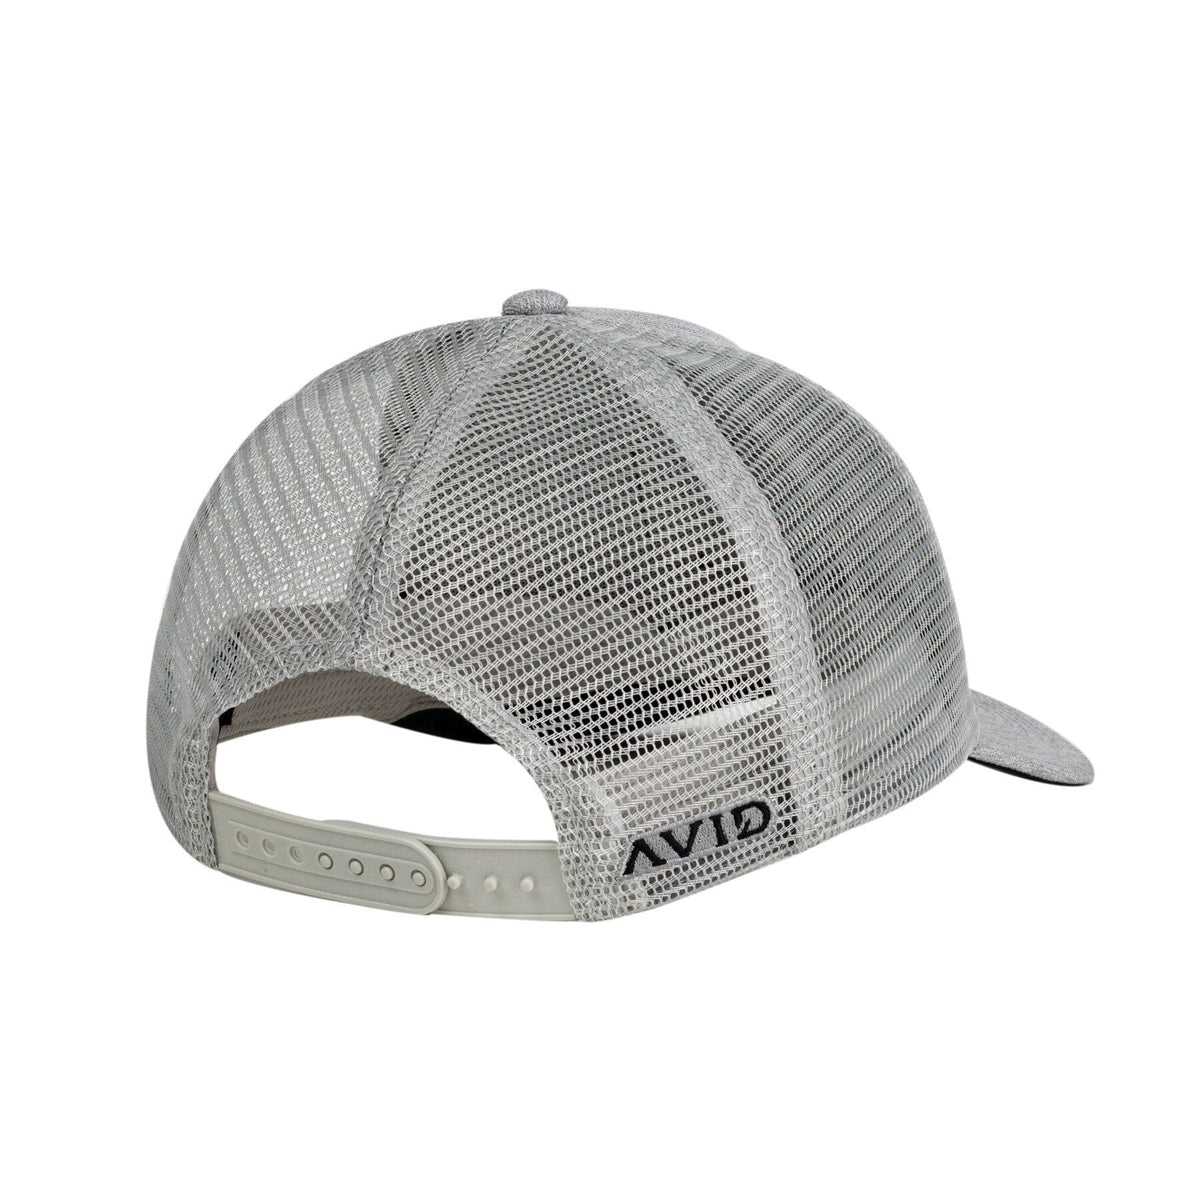 Avid LayDay Trucker Hat